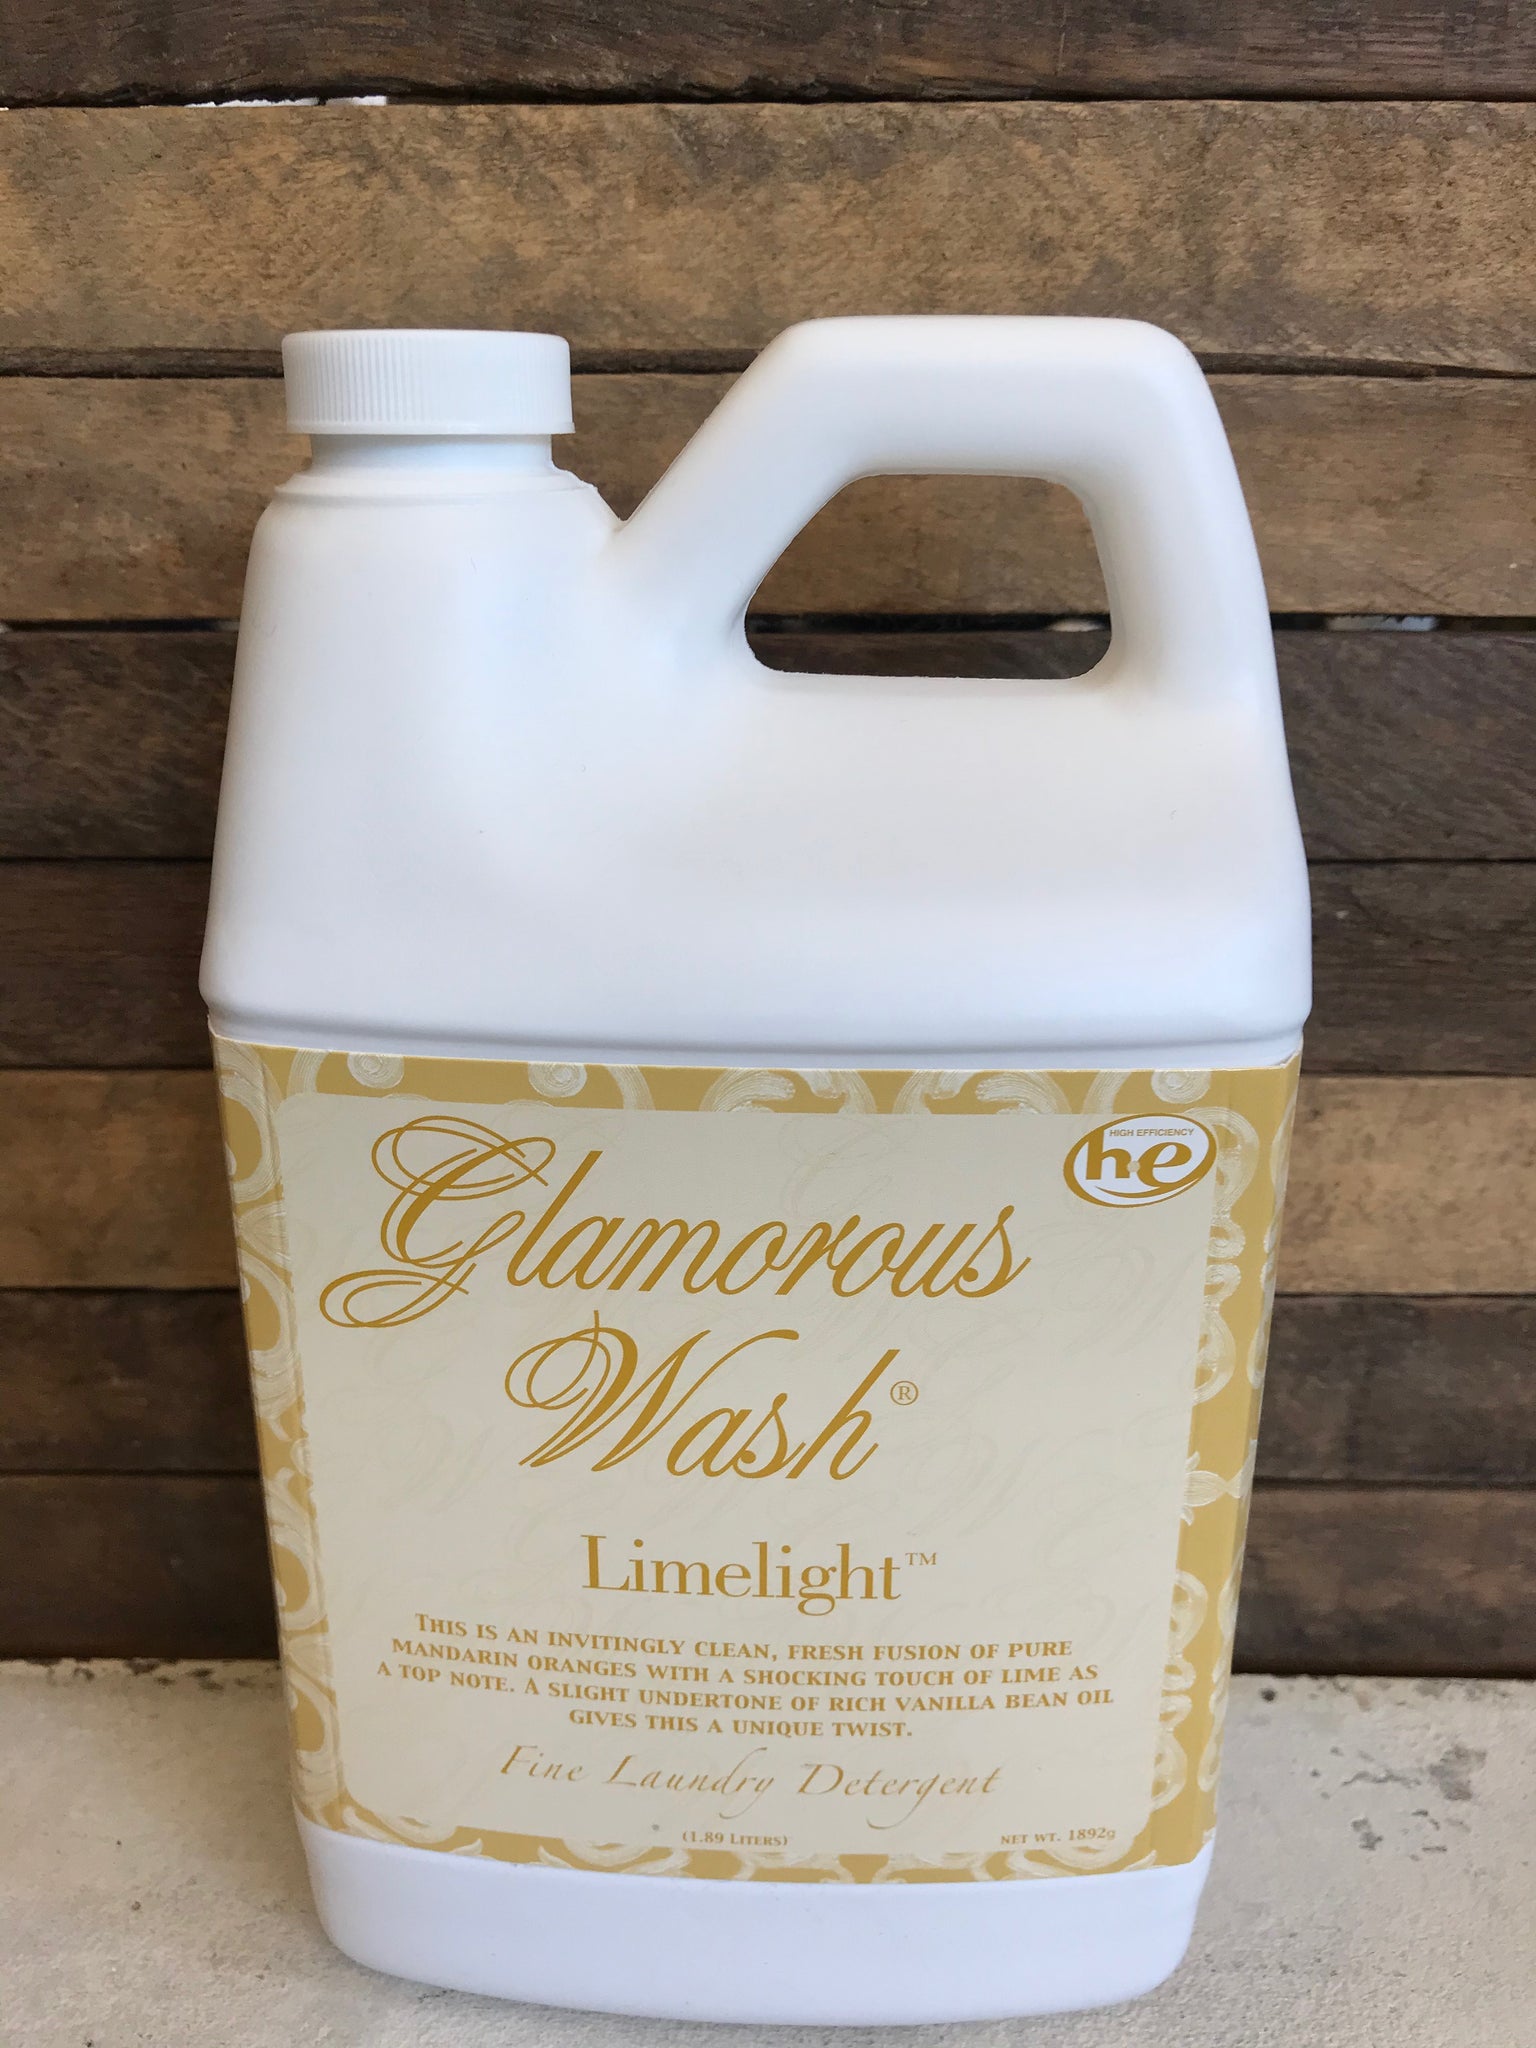 Limelight Glamorous Wash 1892 grams